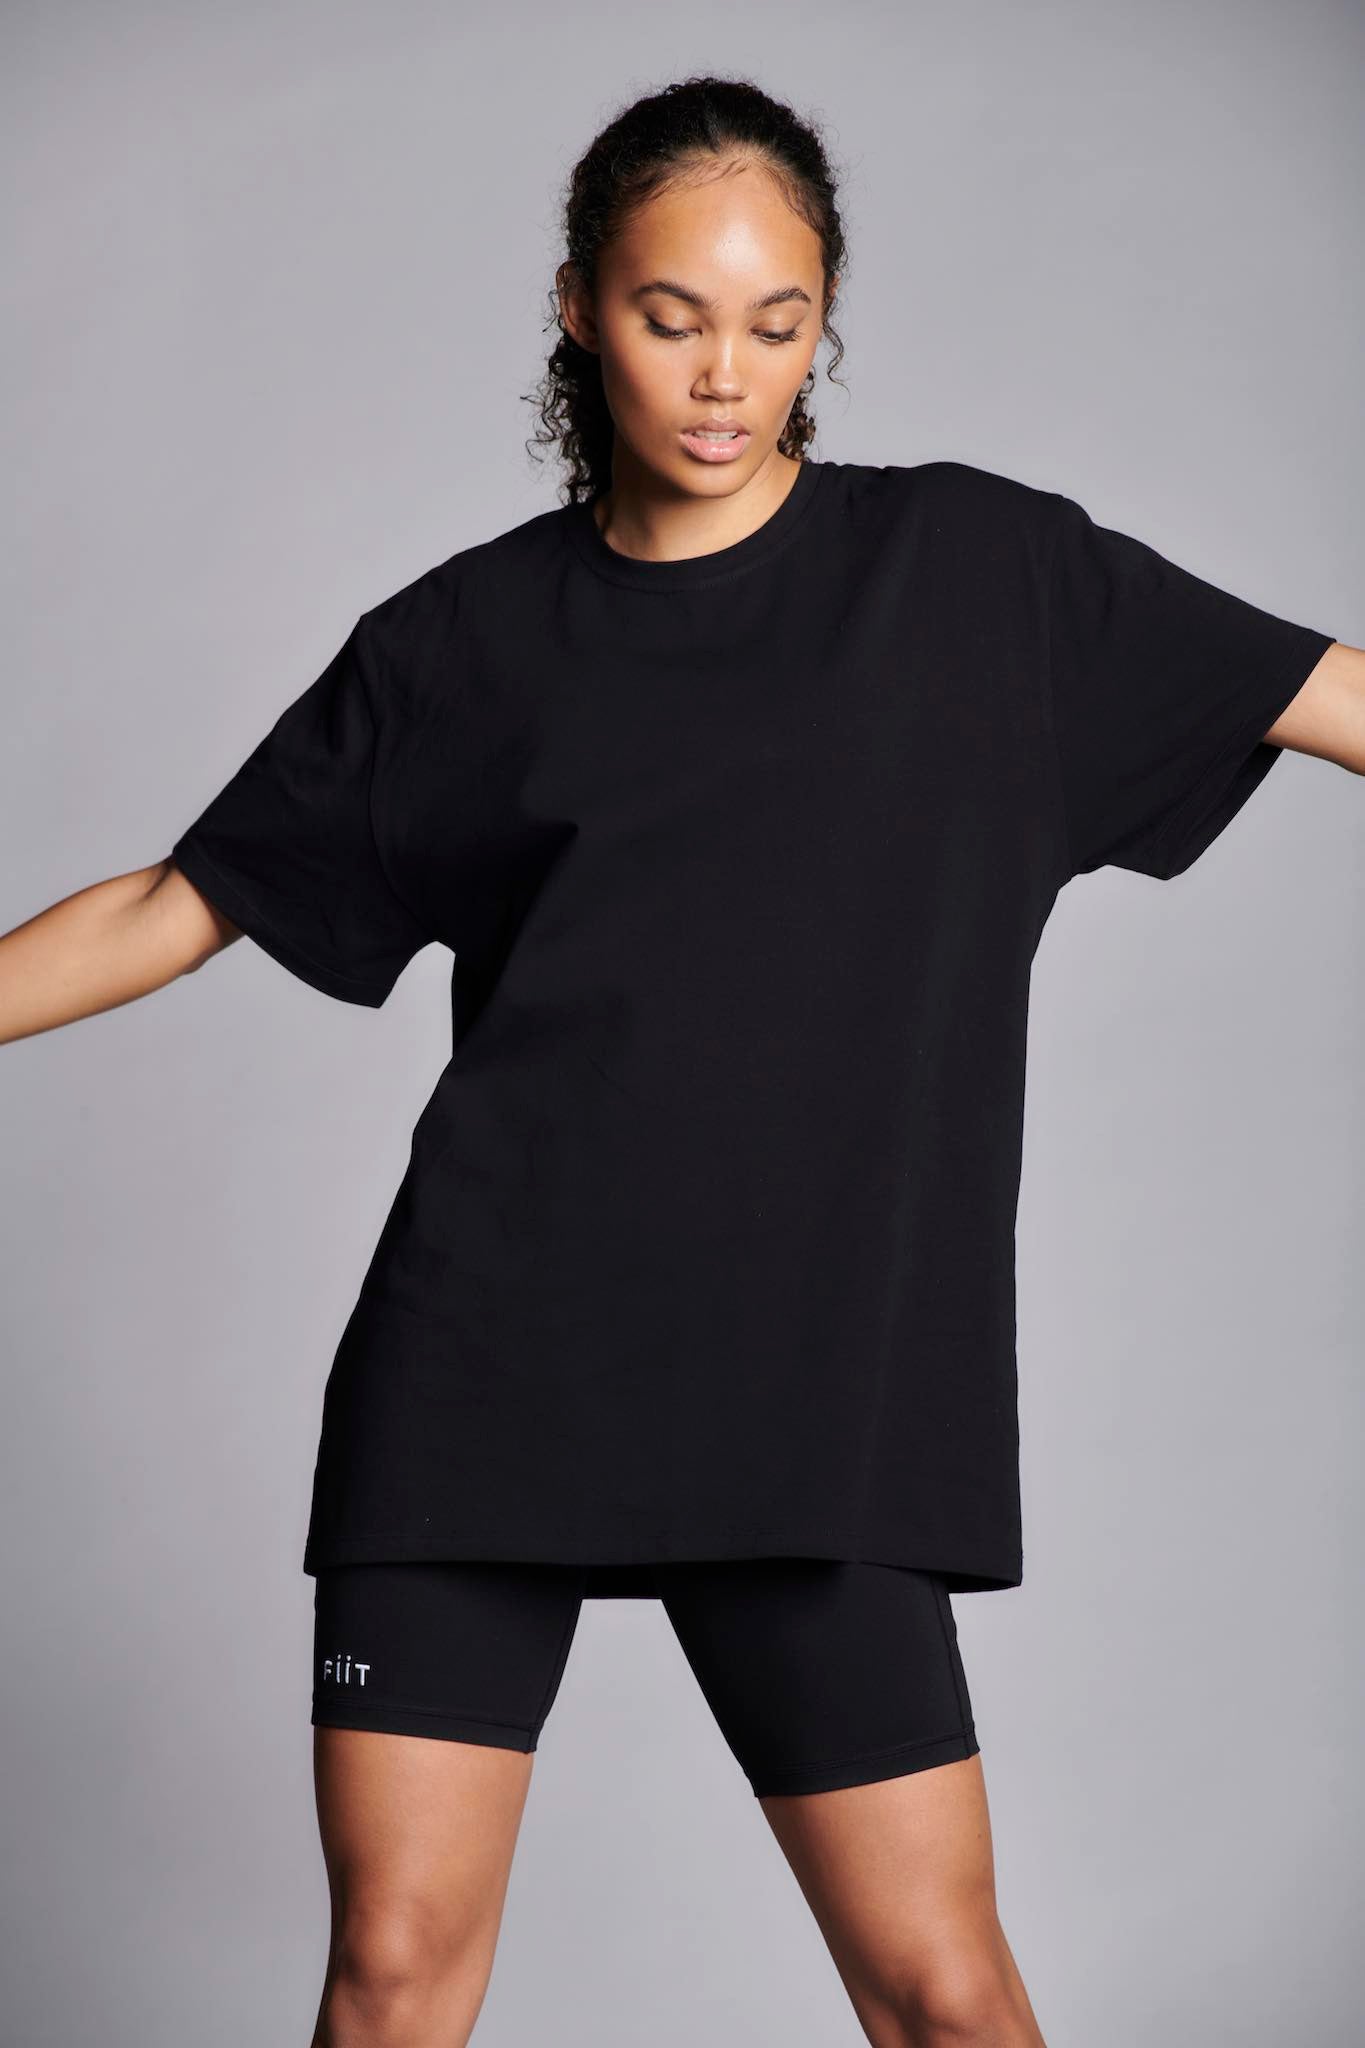 Unisex Oversized Fiit T-shirt SHOP – FIIT